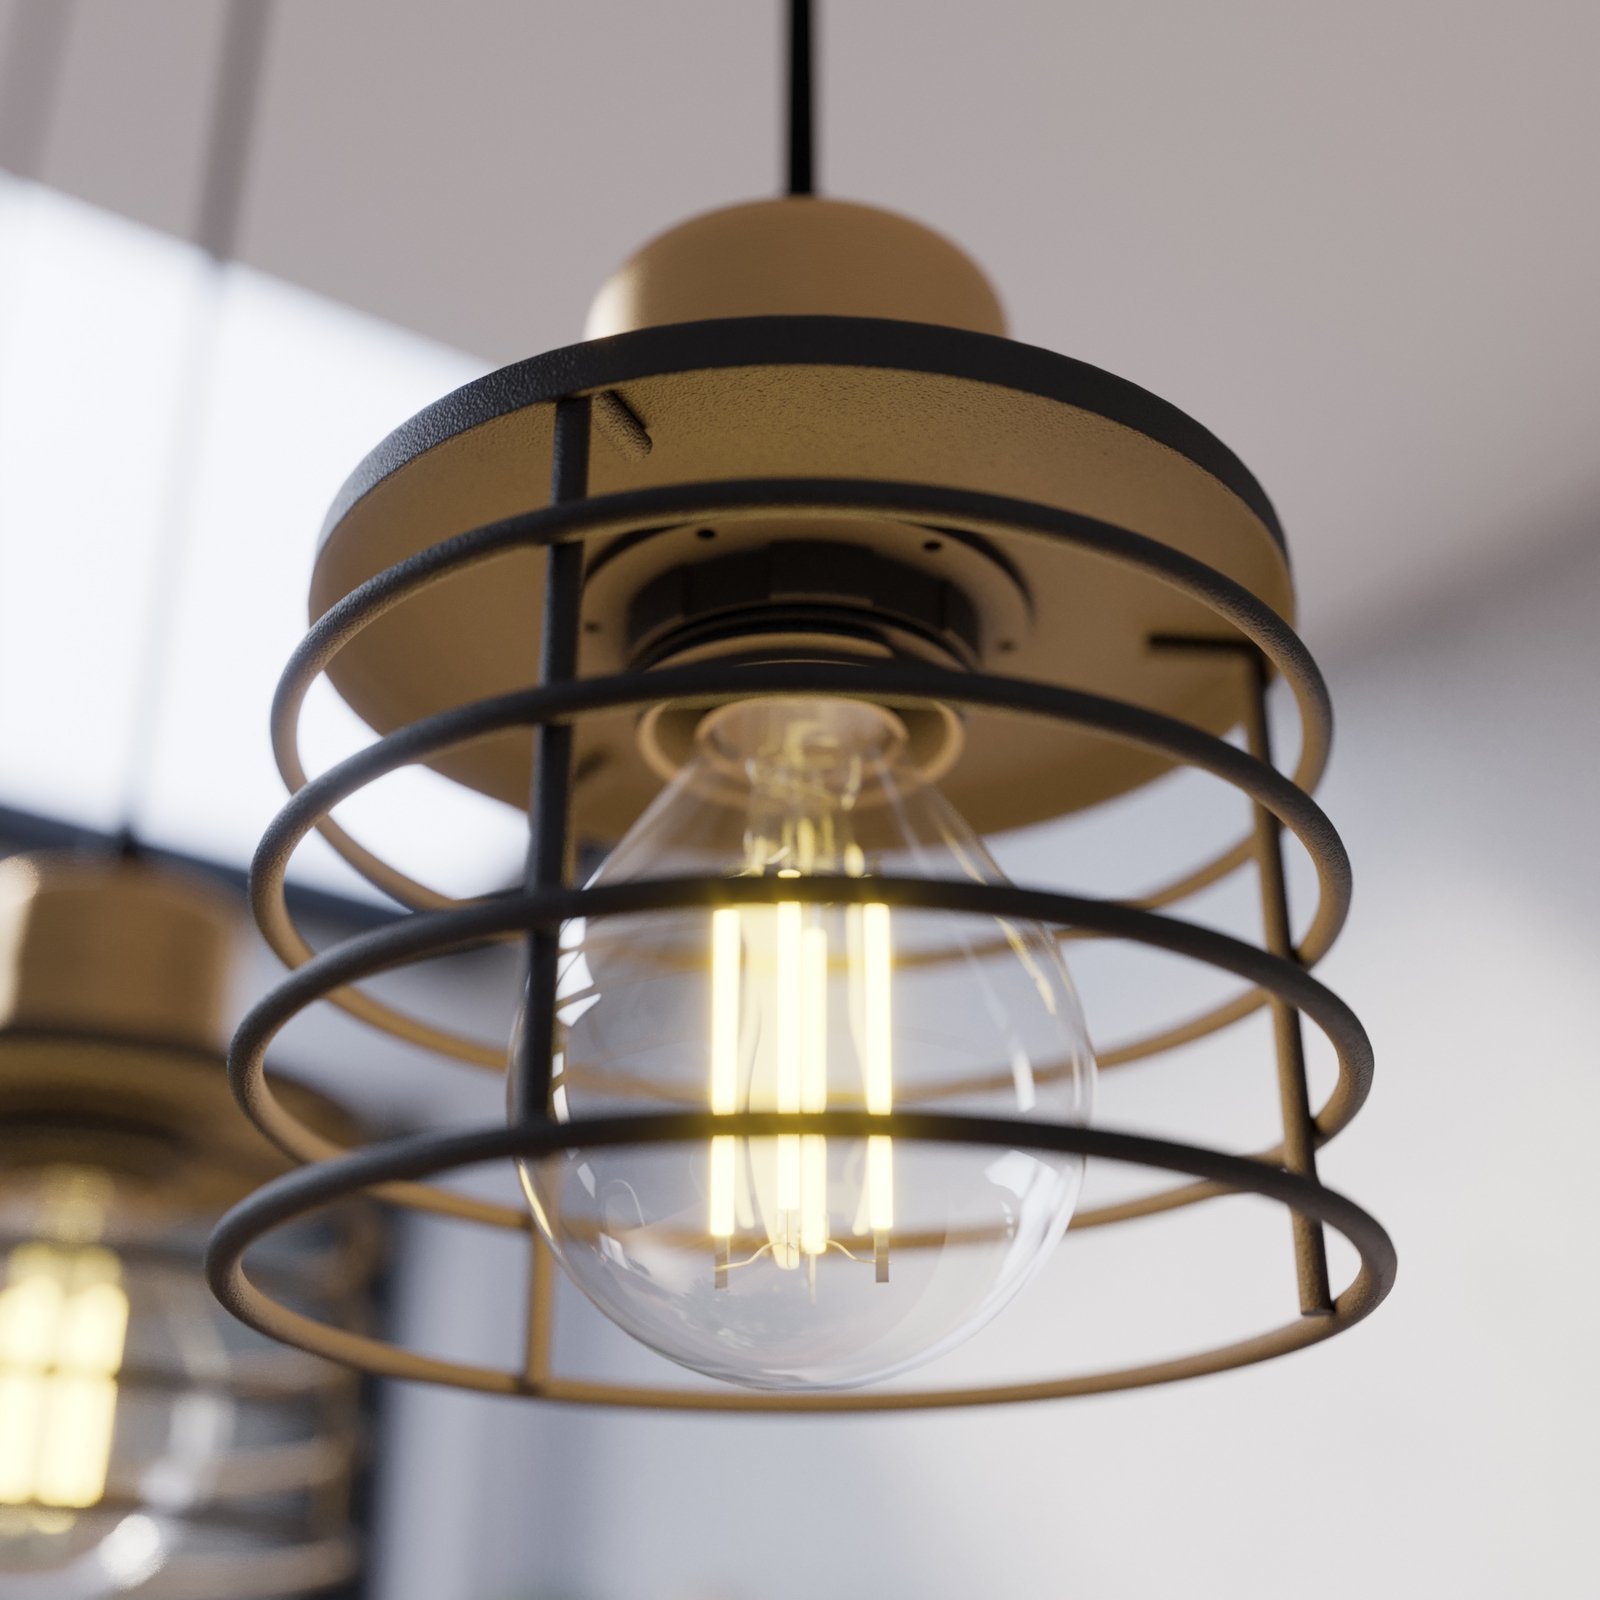 Edison hanglamp in zwart/koper, 3-lamps lang